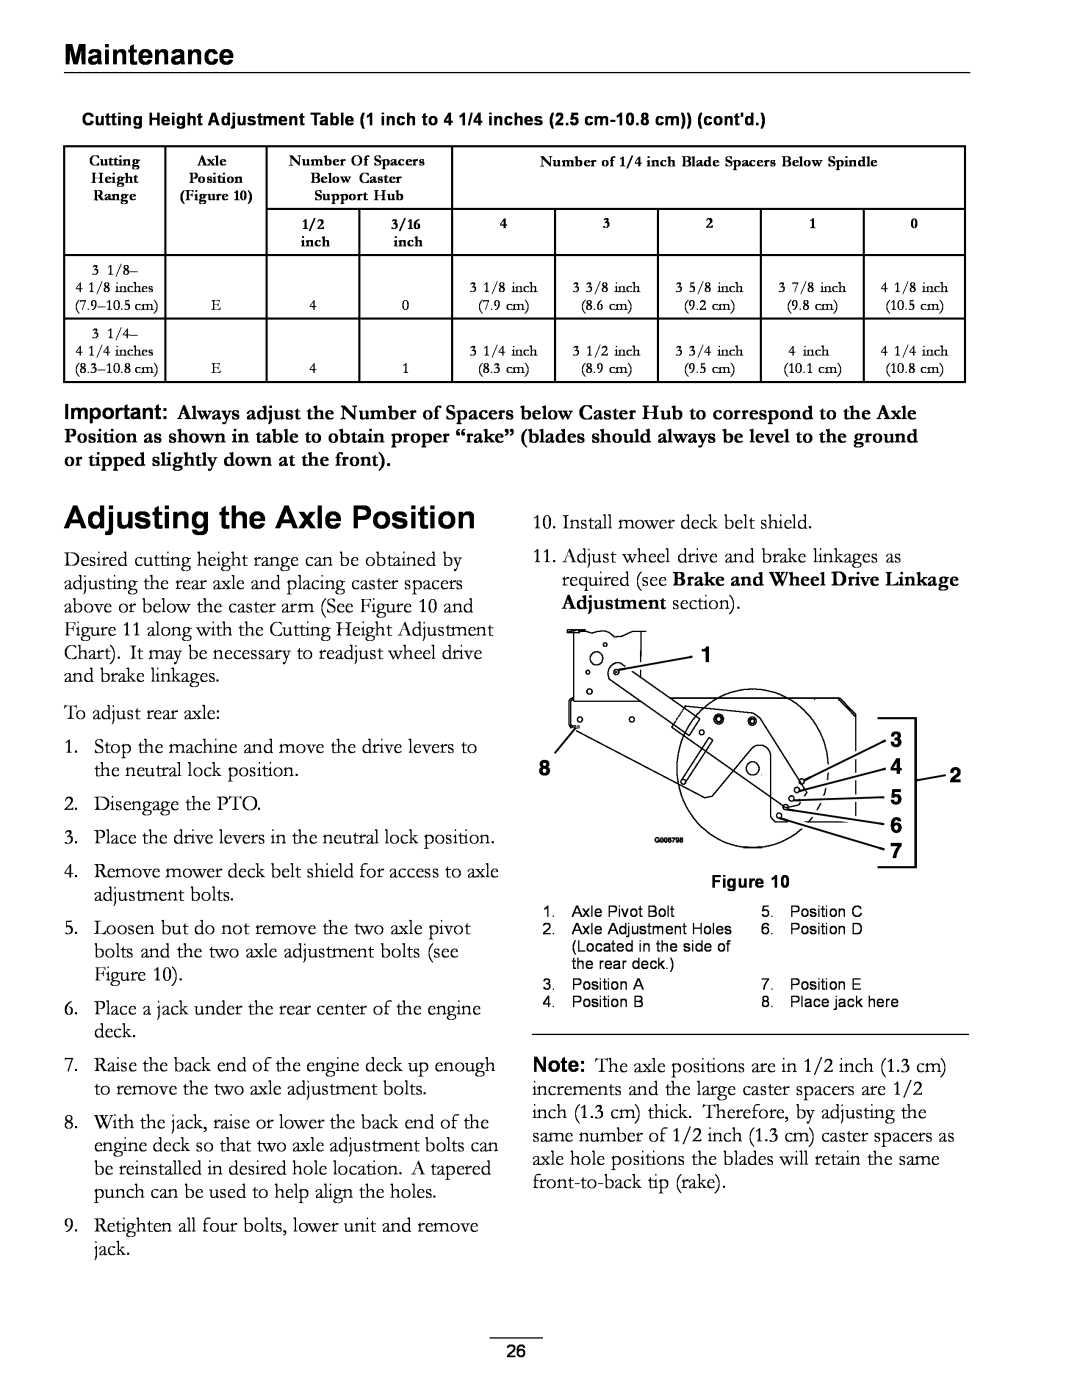 Exmark 4500-352 manual Adjusting the Axle Position, Maintenance 